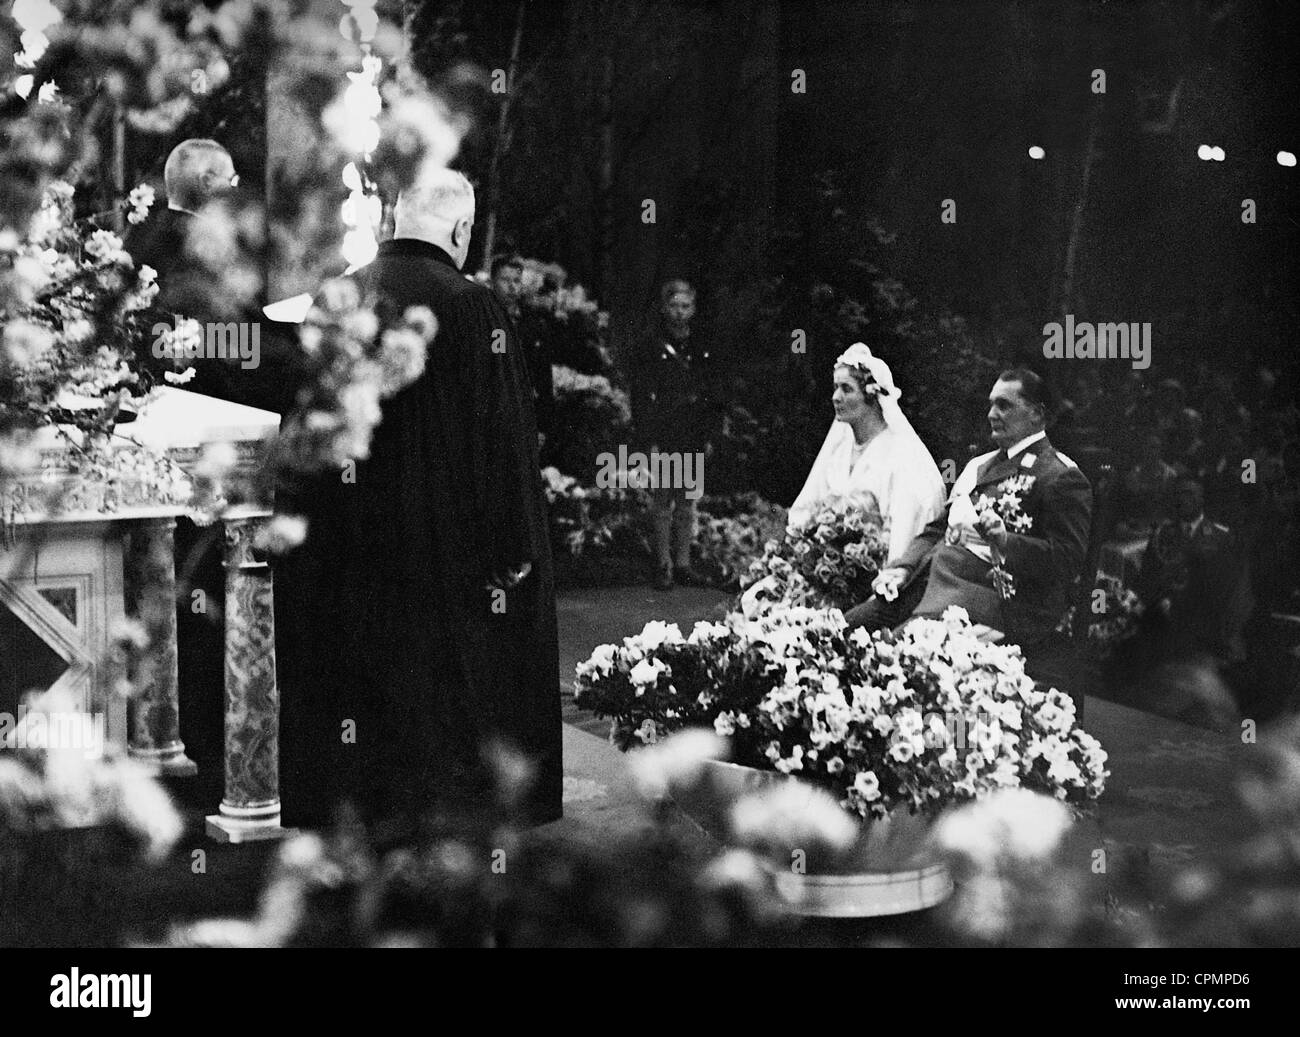 Wedding of Hermann Goring with Emmy Goring, born Emmy Sonnemann, 1935 Stock Photo